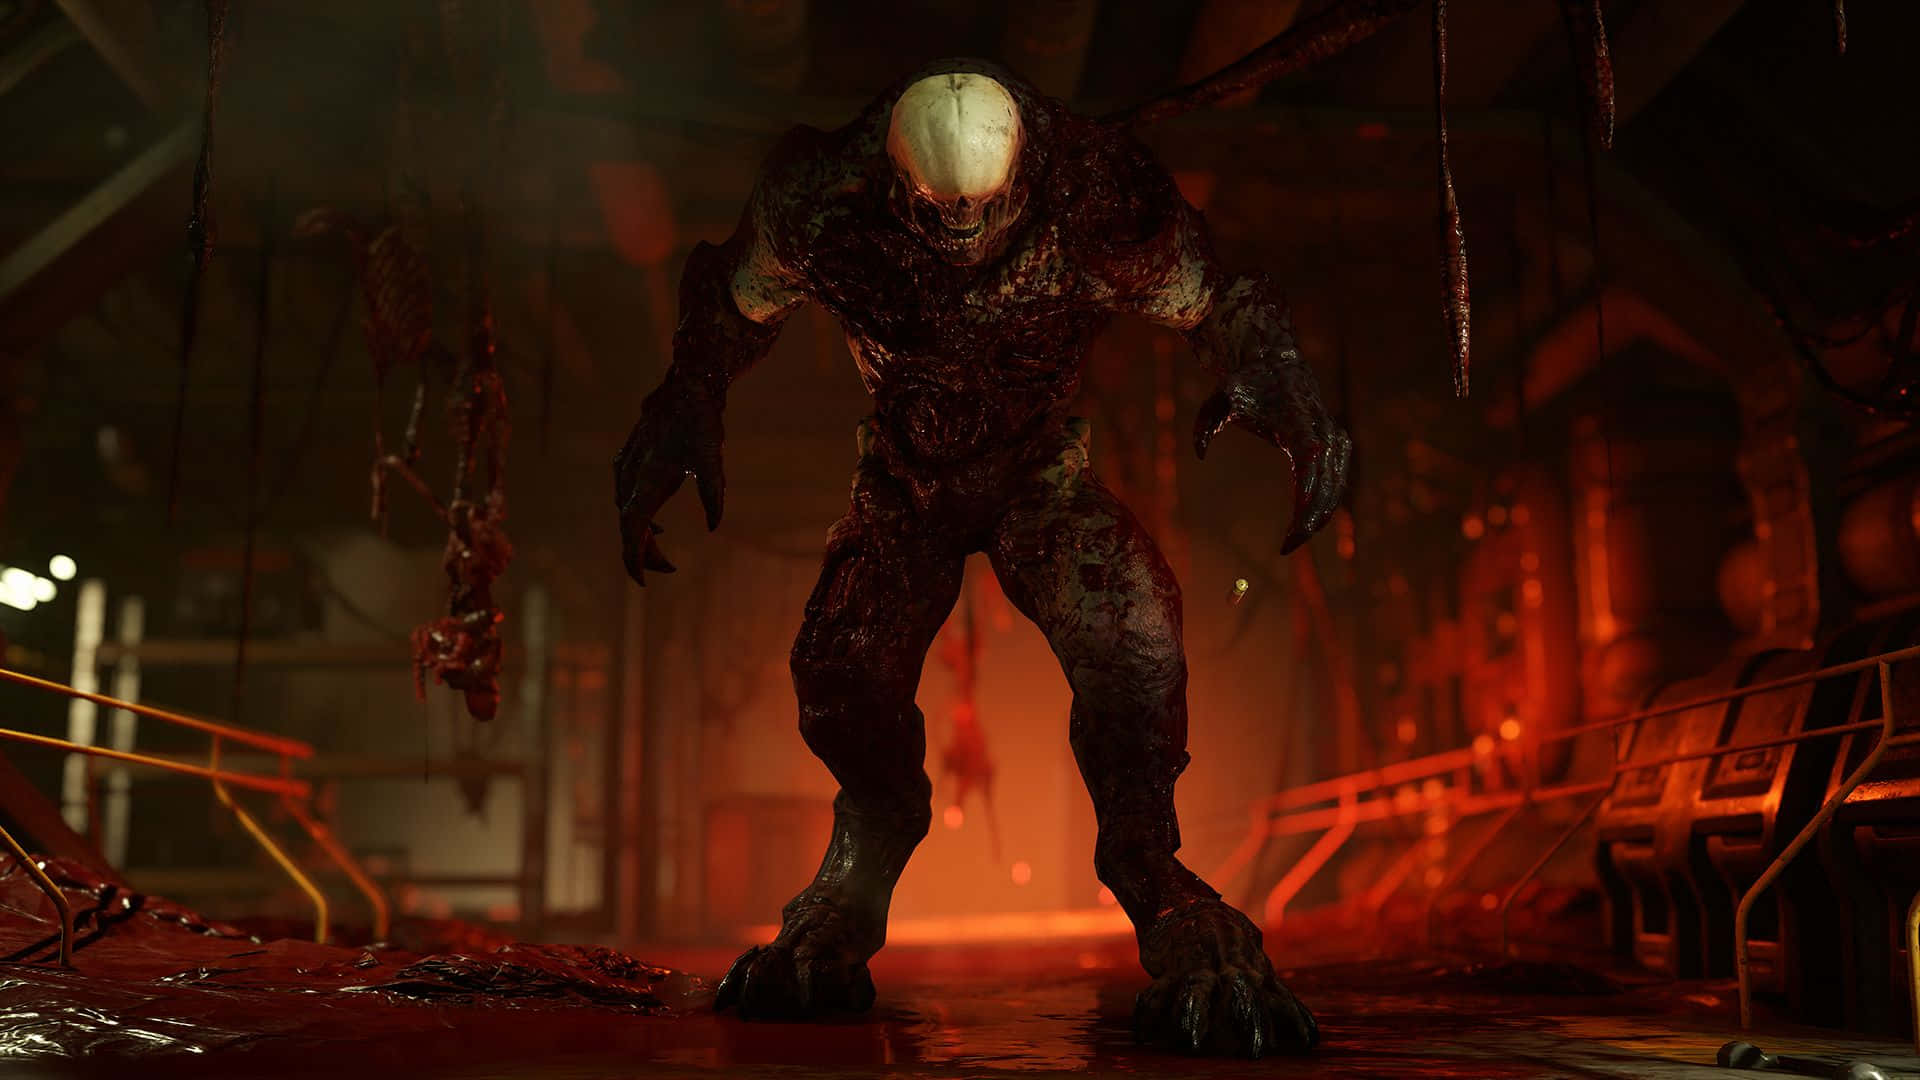 The Iconic Doom Hero Fiercely Battling Against Horrific Enemies In The Eye Of Inferno.